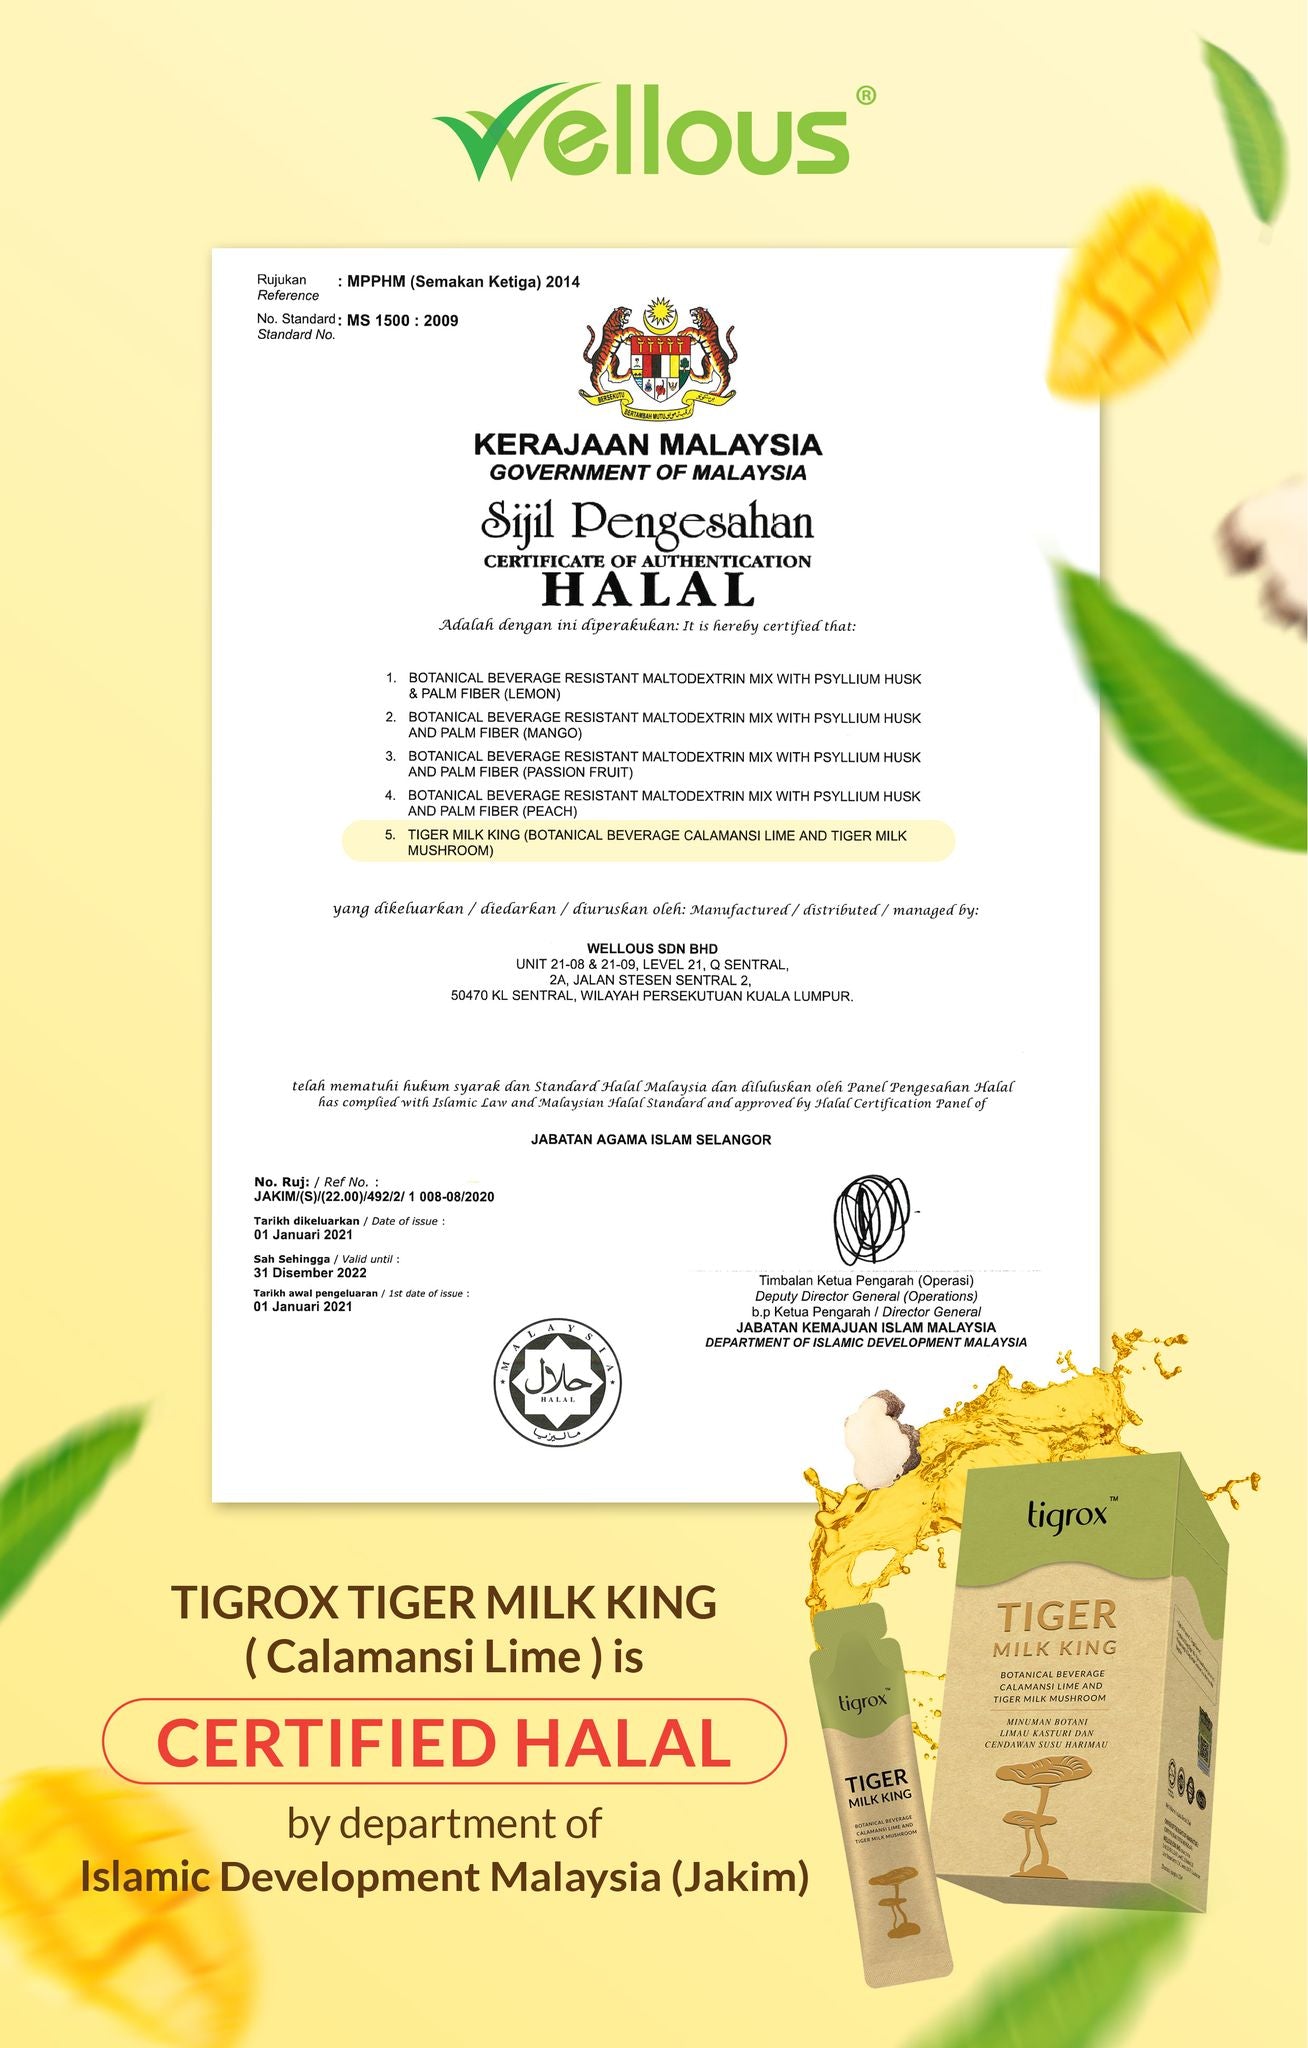 Milk king tiger Tigrox Tiger